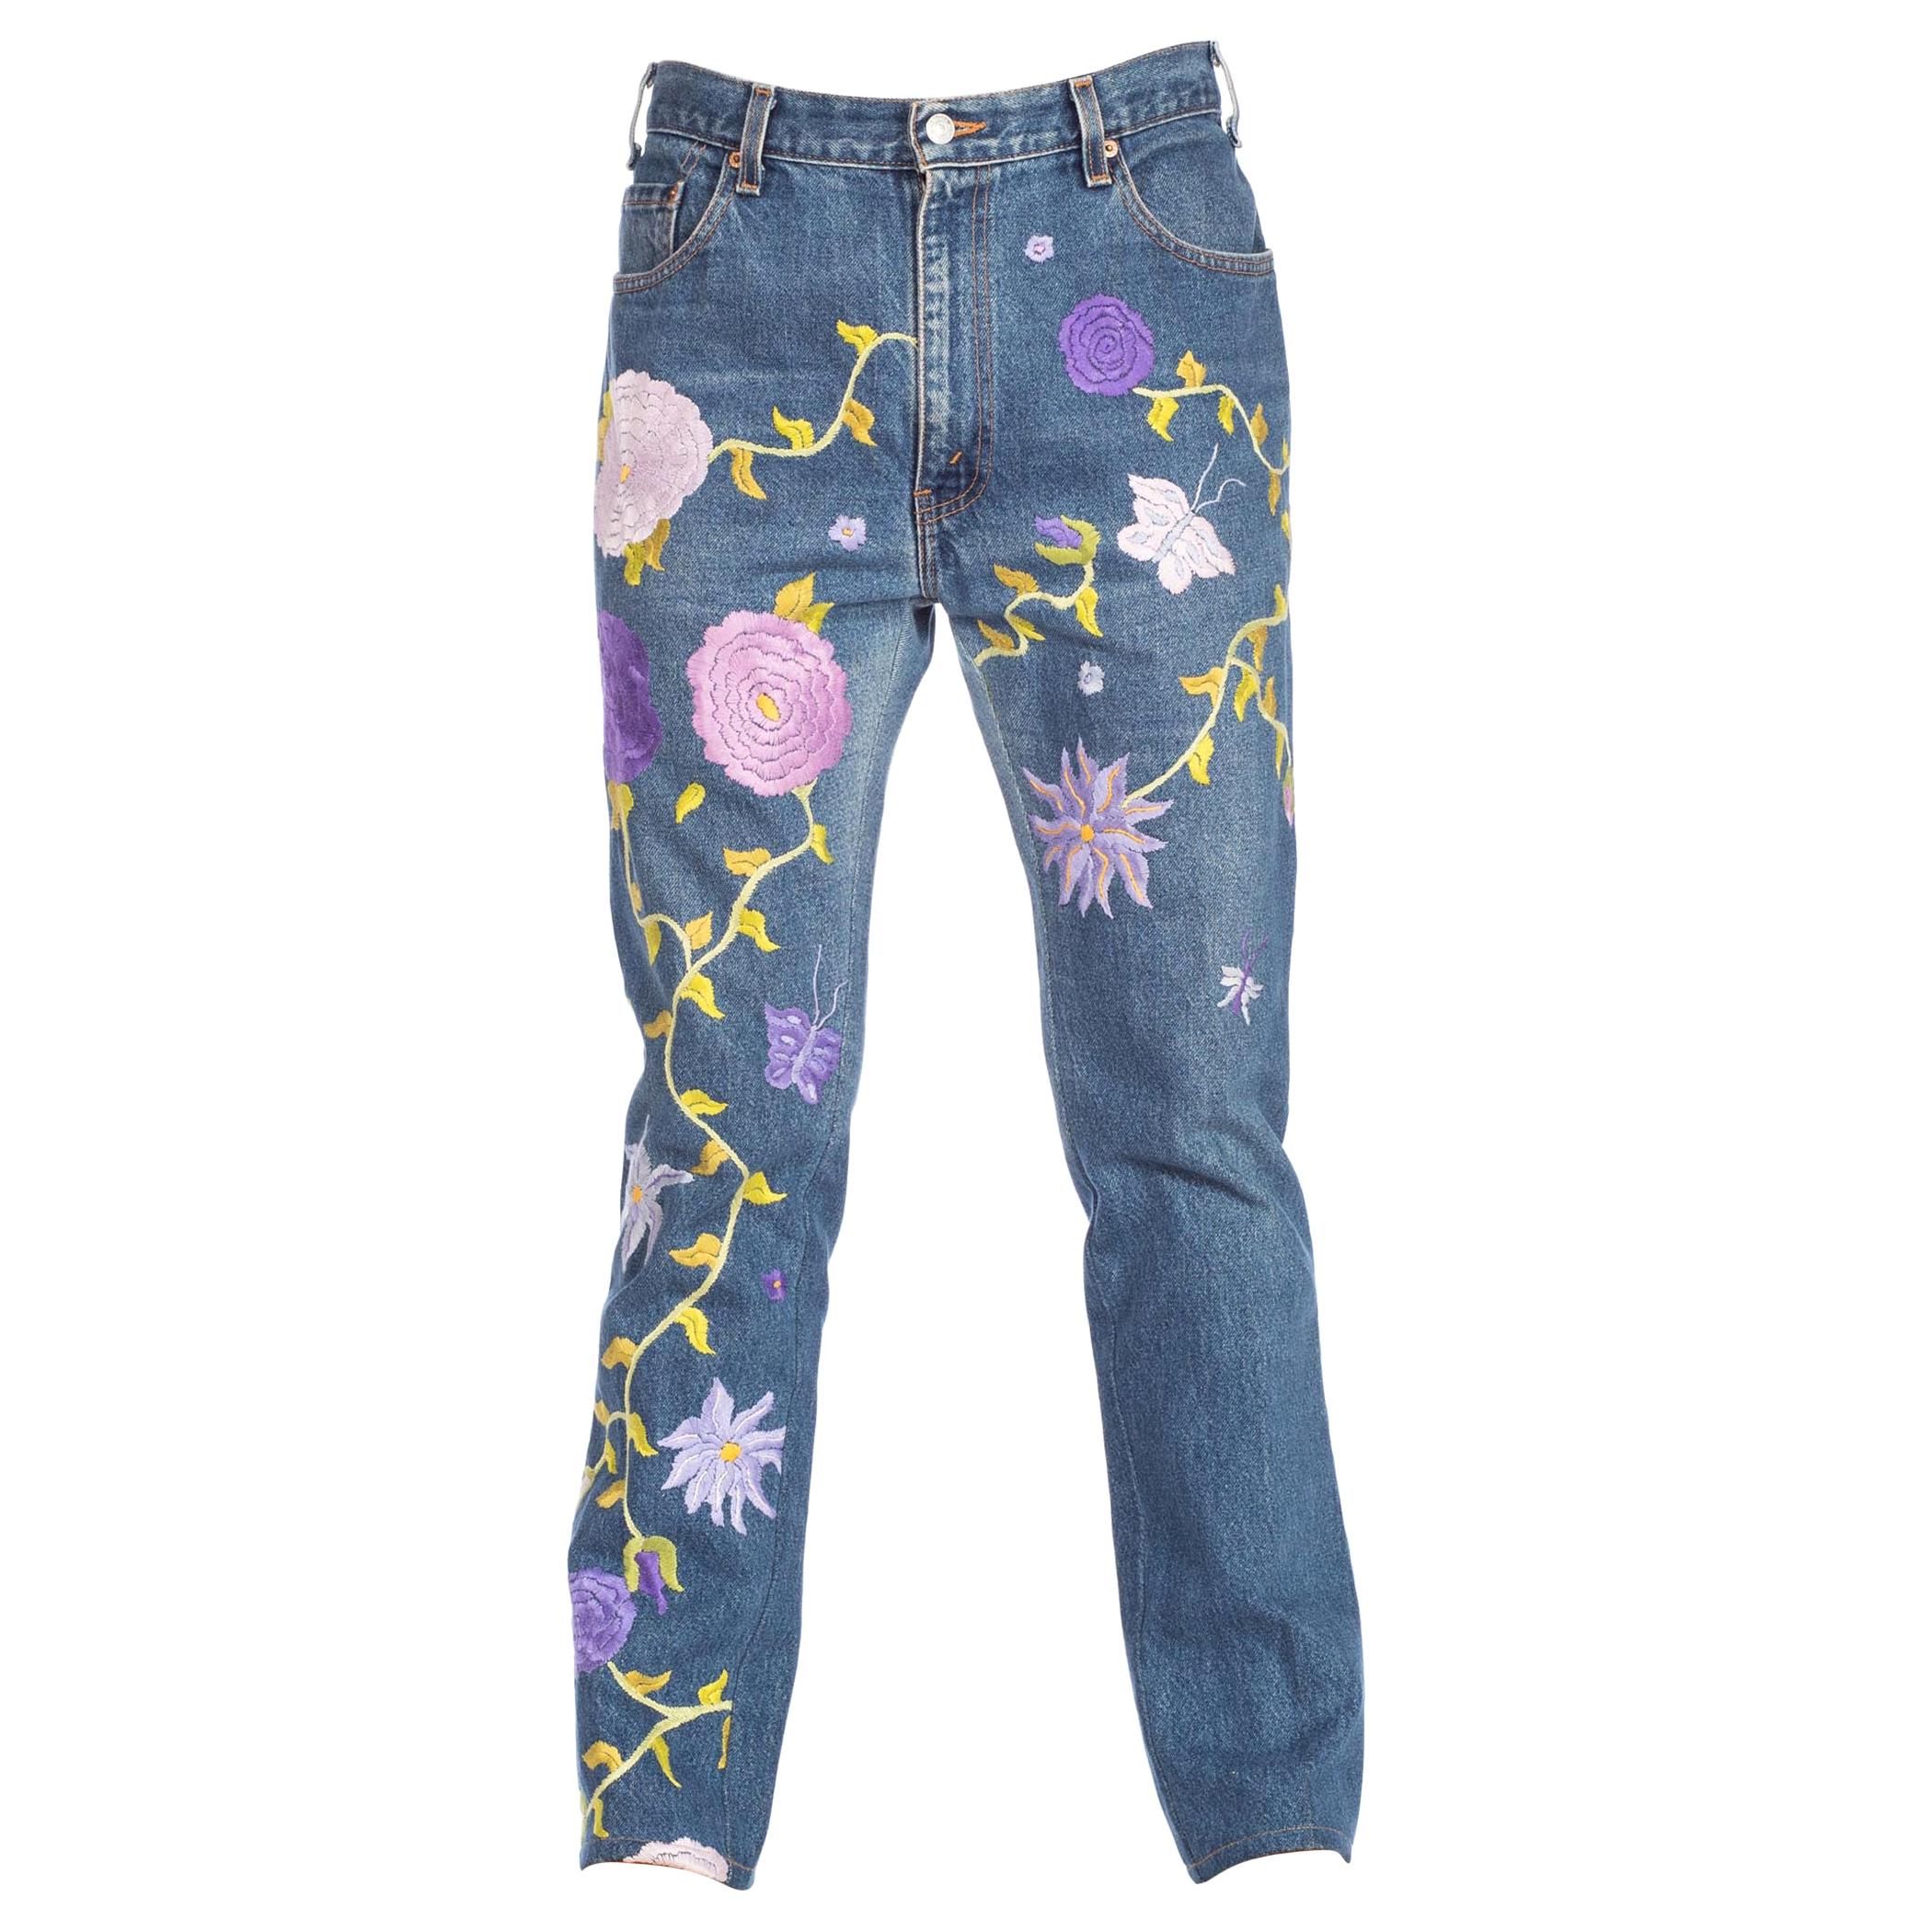 1990S LEVIS Men's Hippie Boho Floral Embroidered Jeans